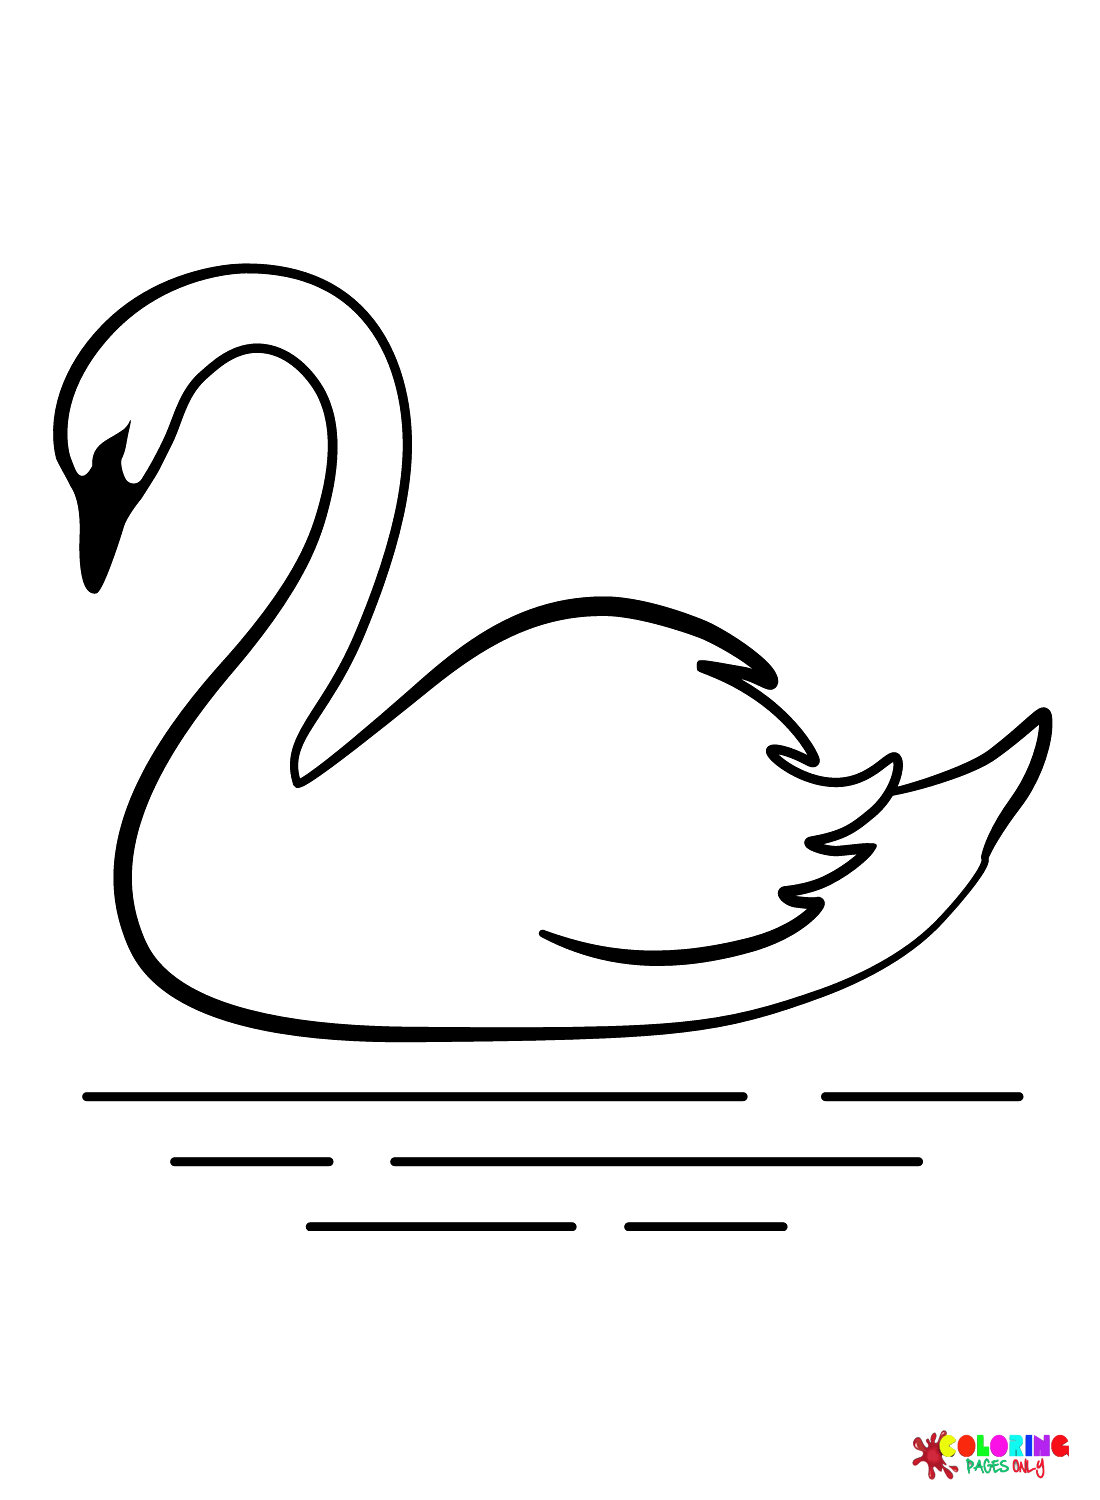 Printable Swan from Swan